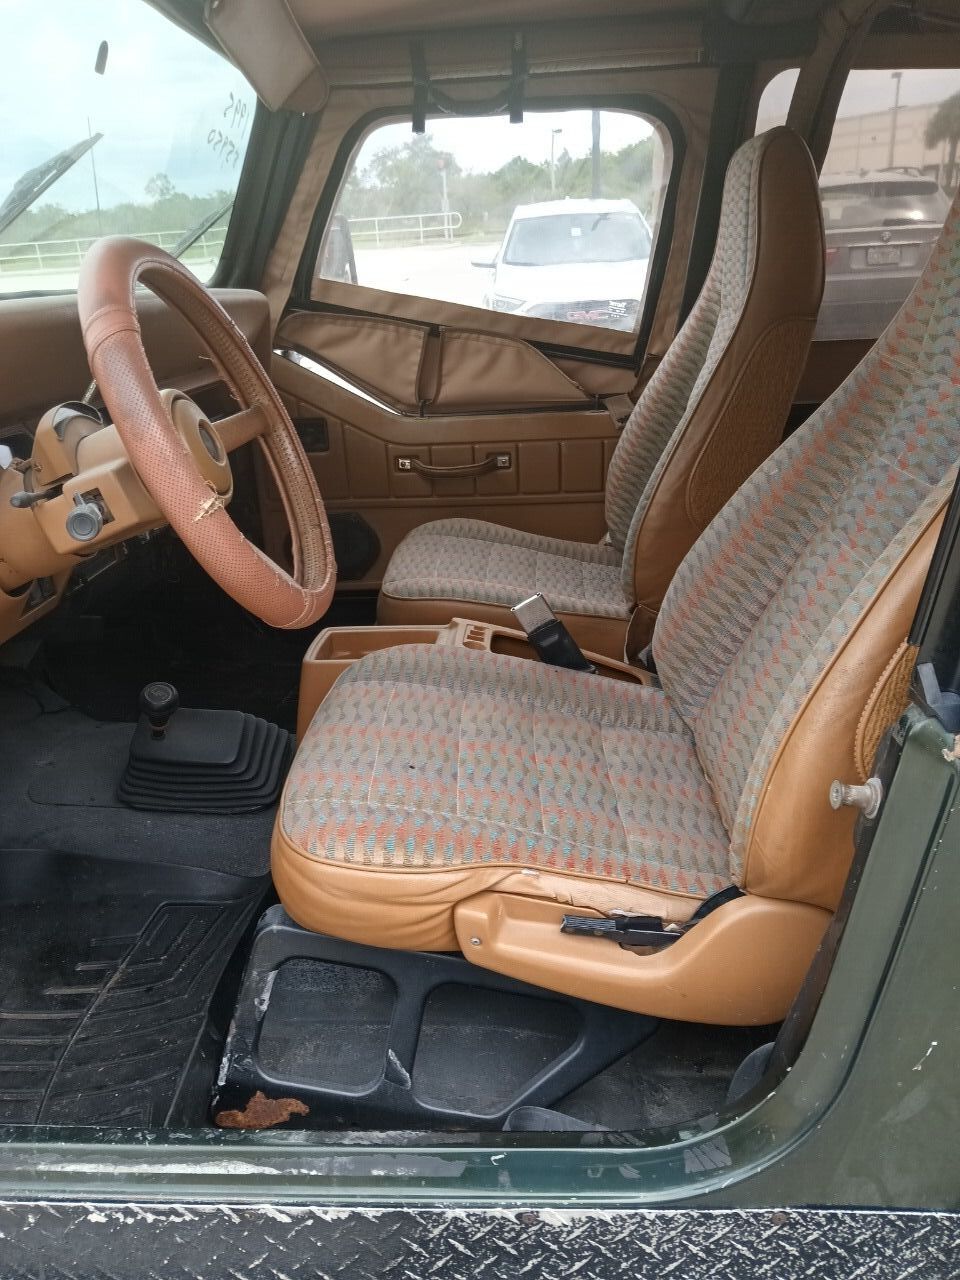 1995 Jeep Wrangler SUV / Crossover - $5,950